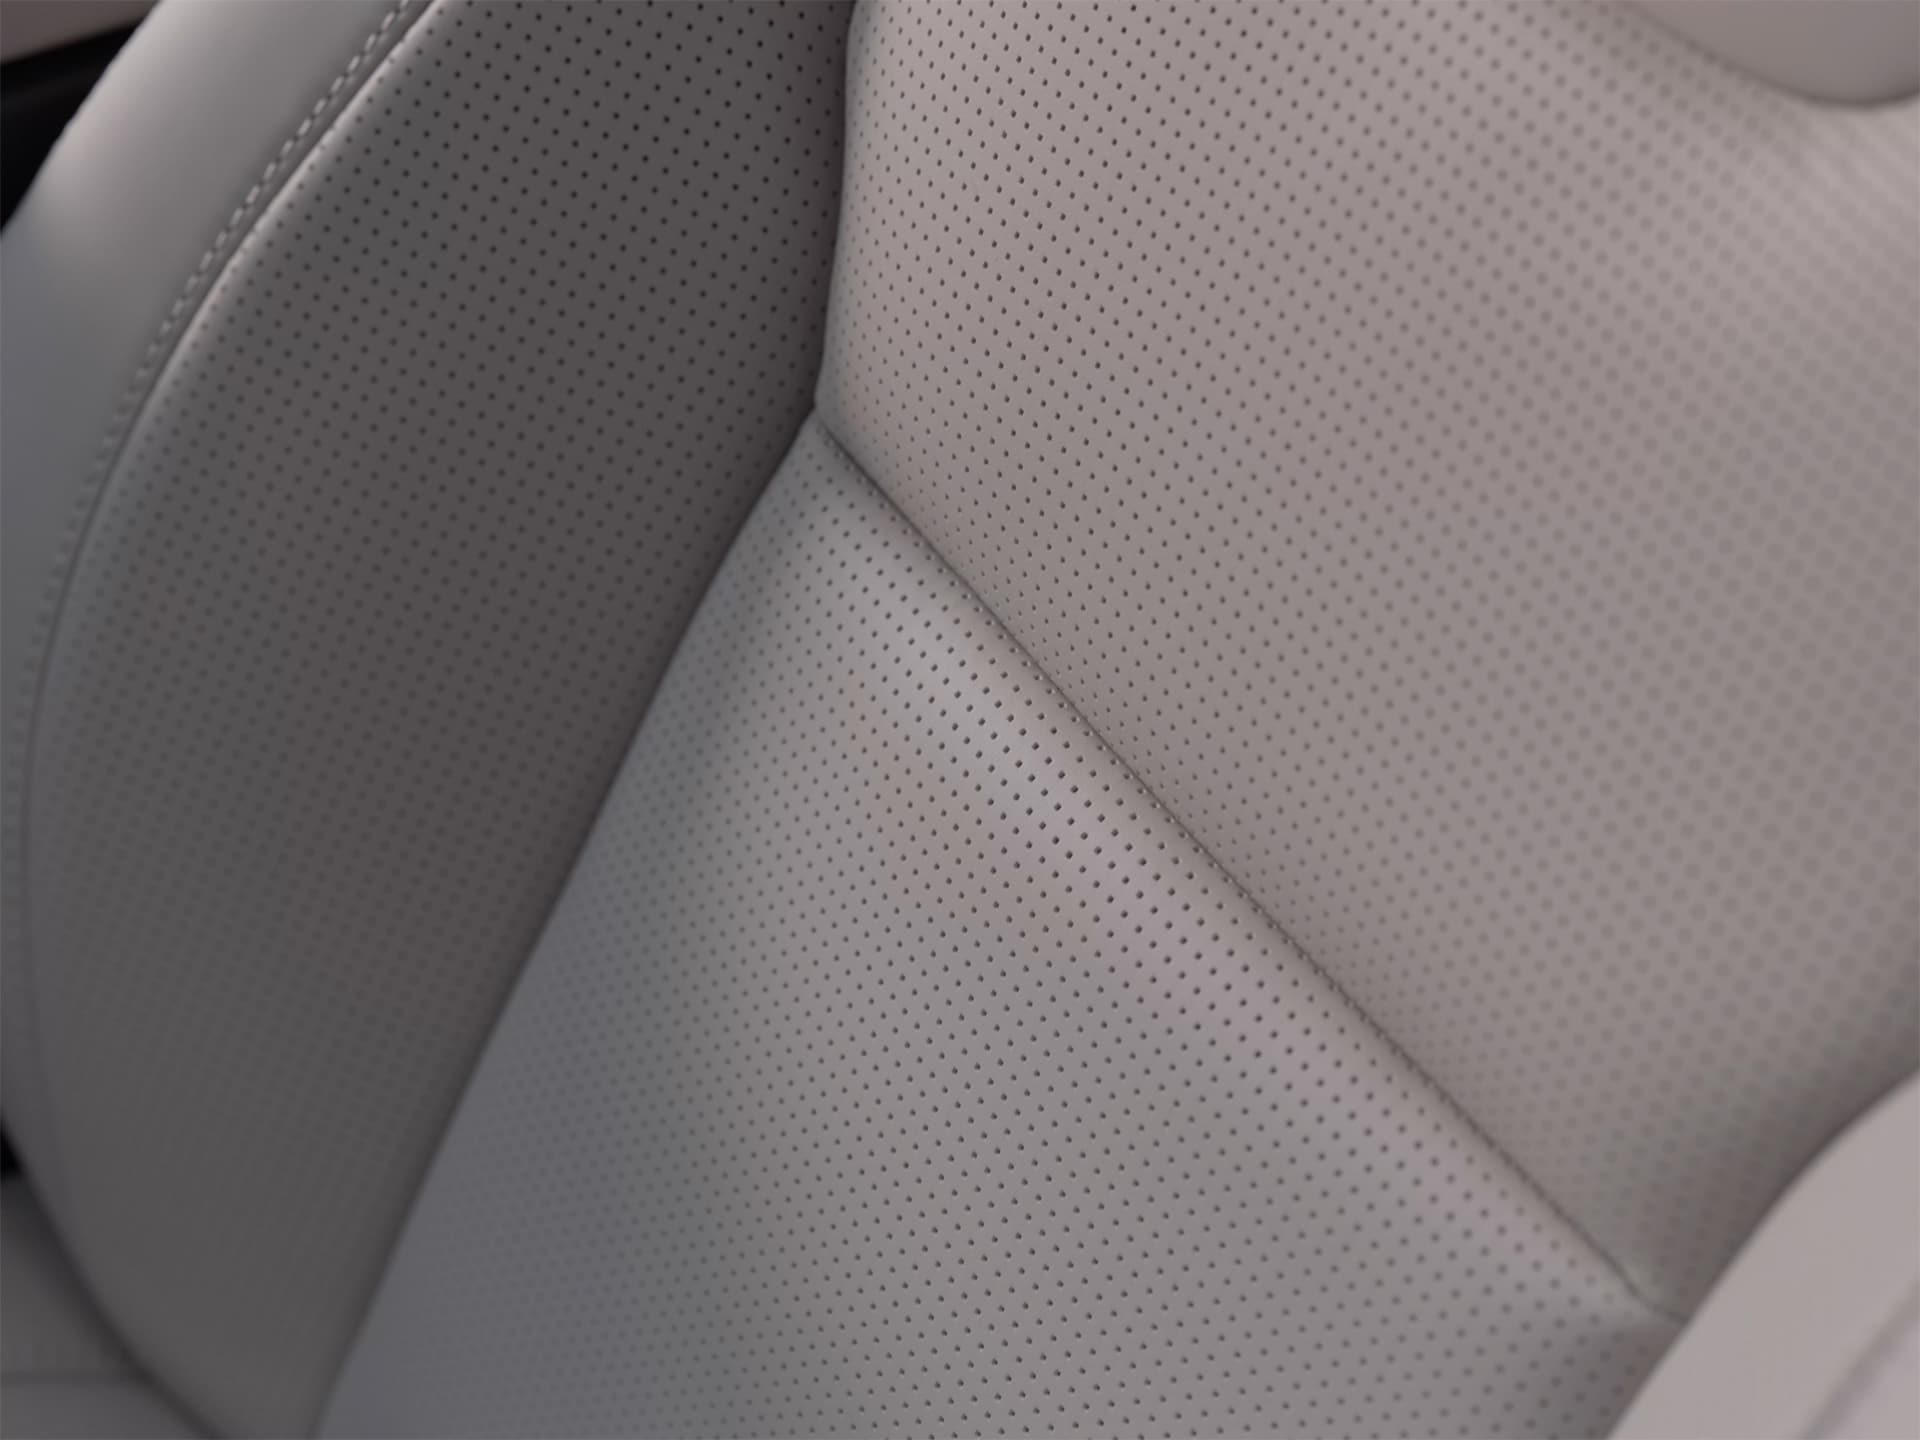 Nappa leather seats in a Volvo S90 sedan.